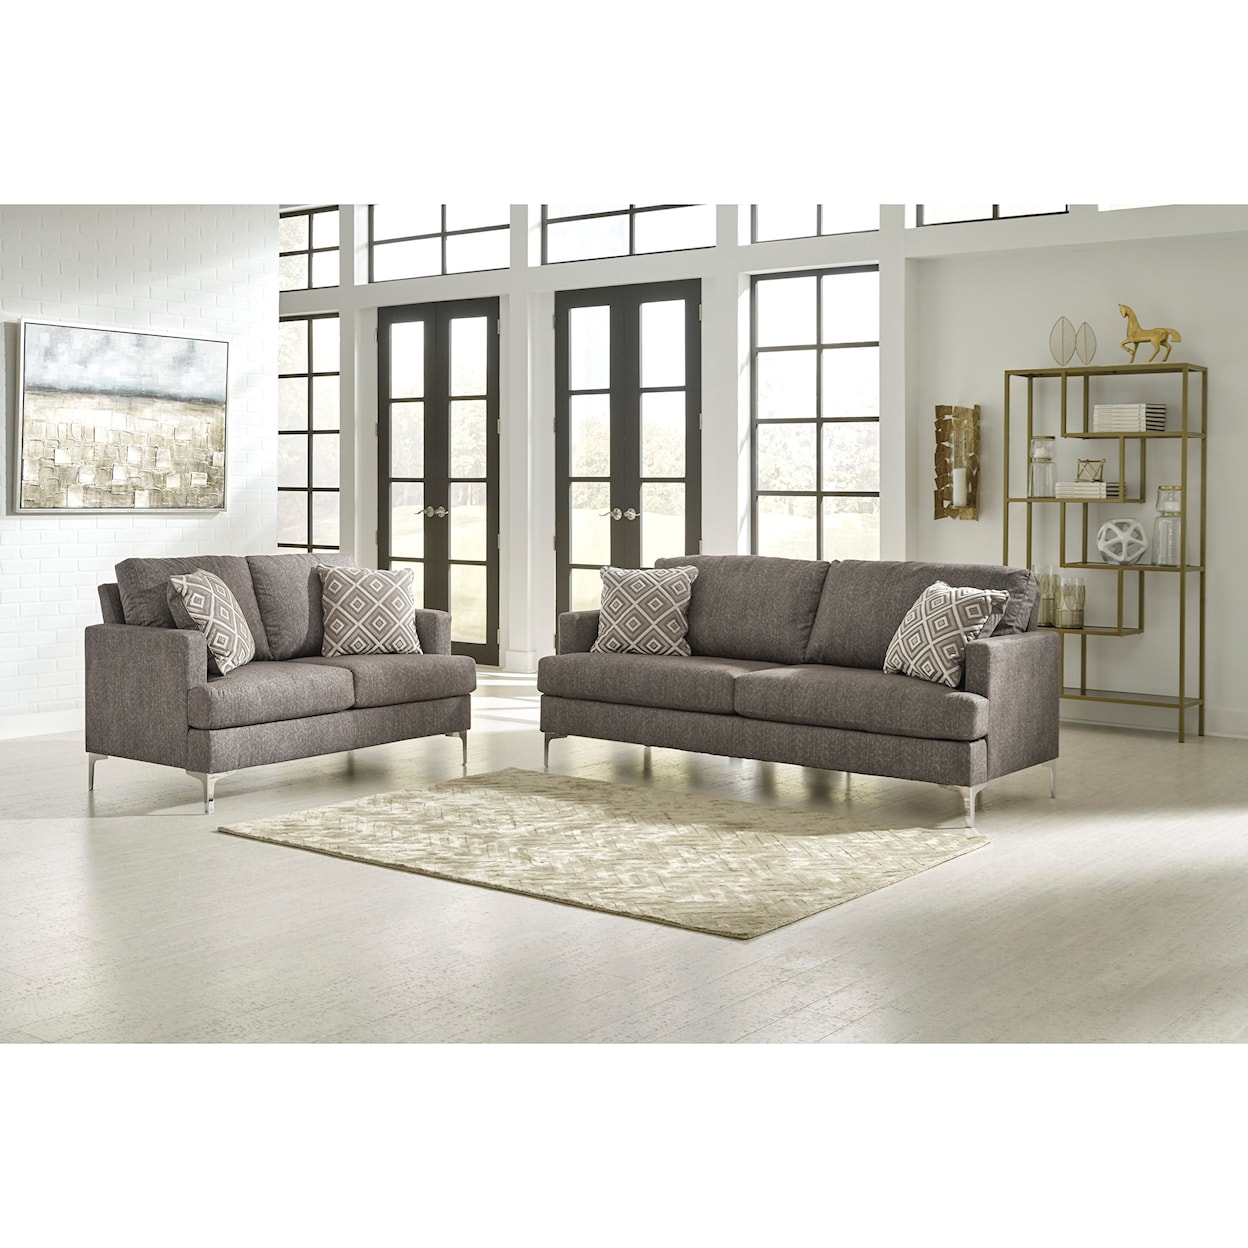 Ashley Furniture Signature Design Arcola Stationary Living Room Group